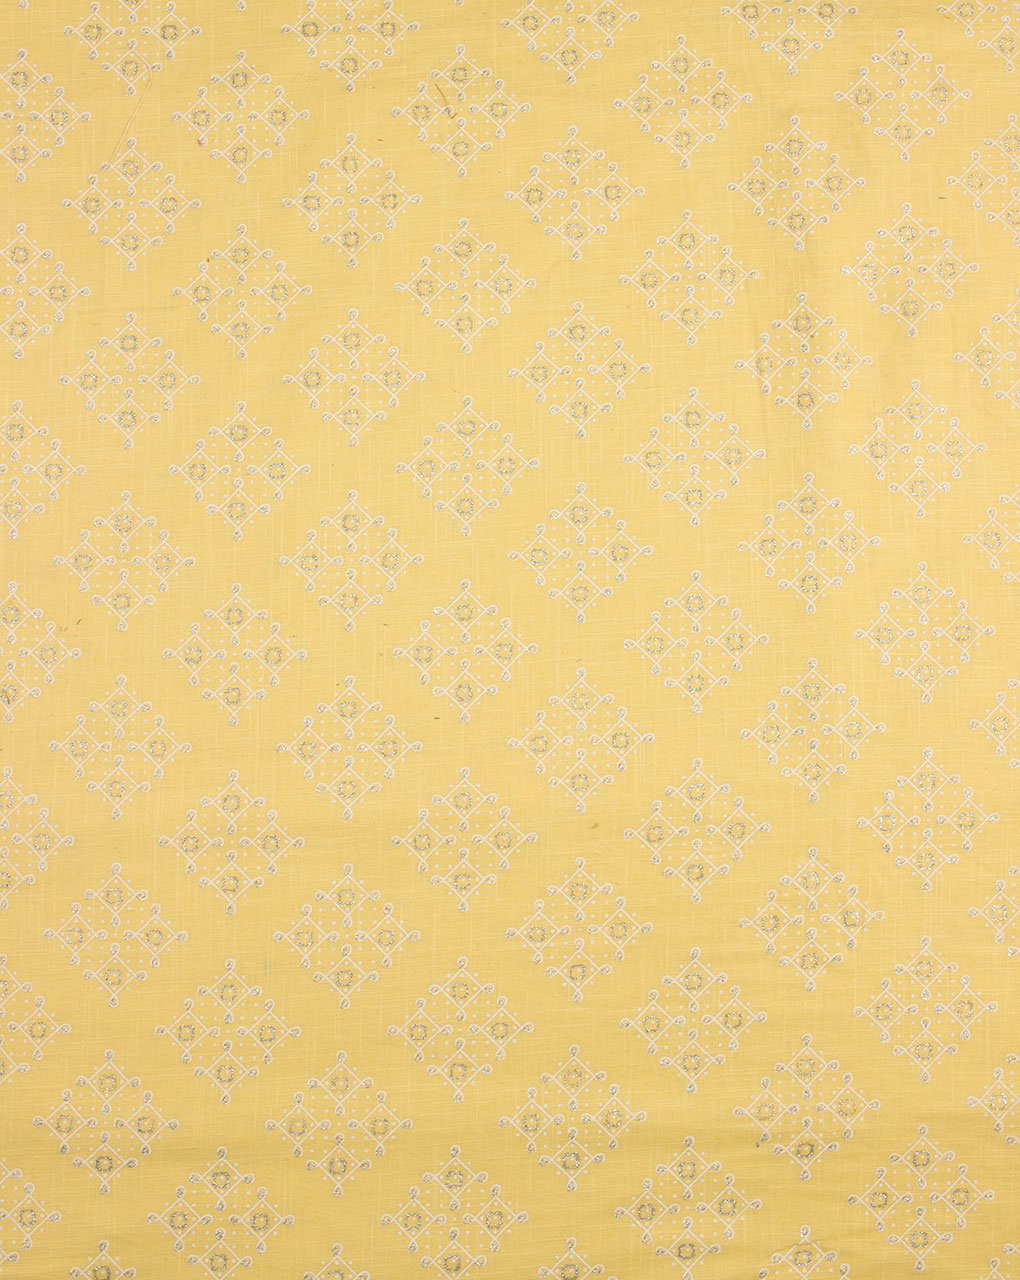 Traditional Screen Print Slub Cotton Fabric - Fabriclore.com